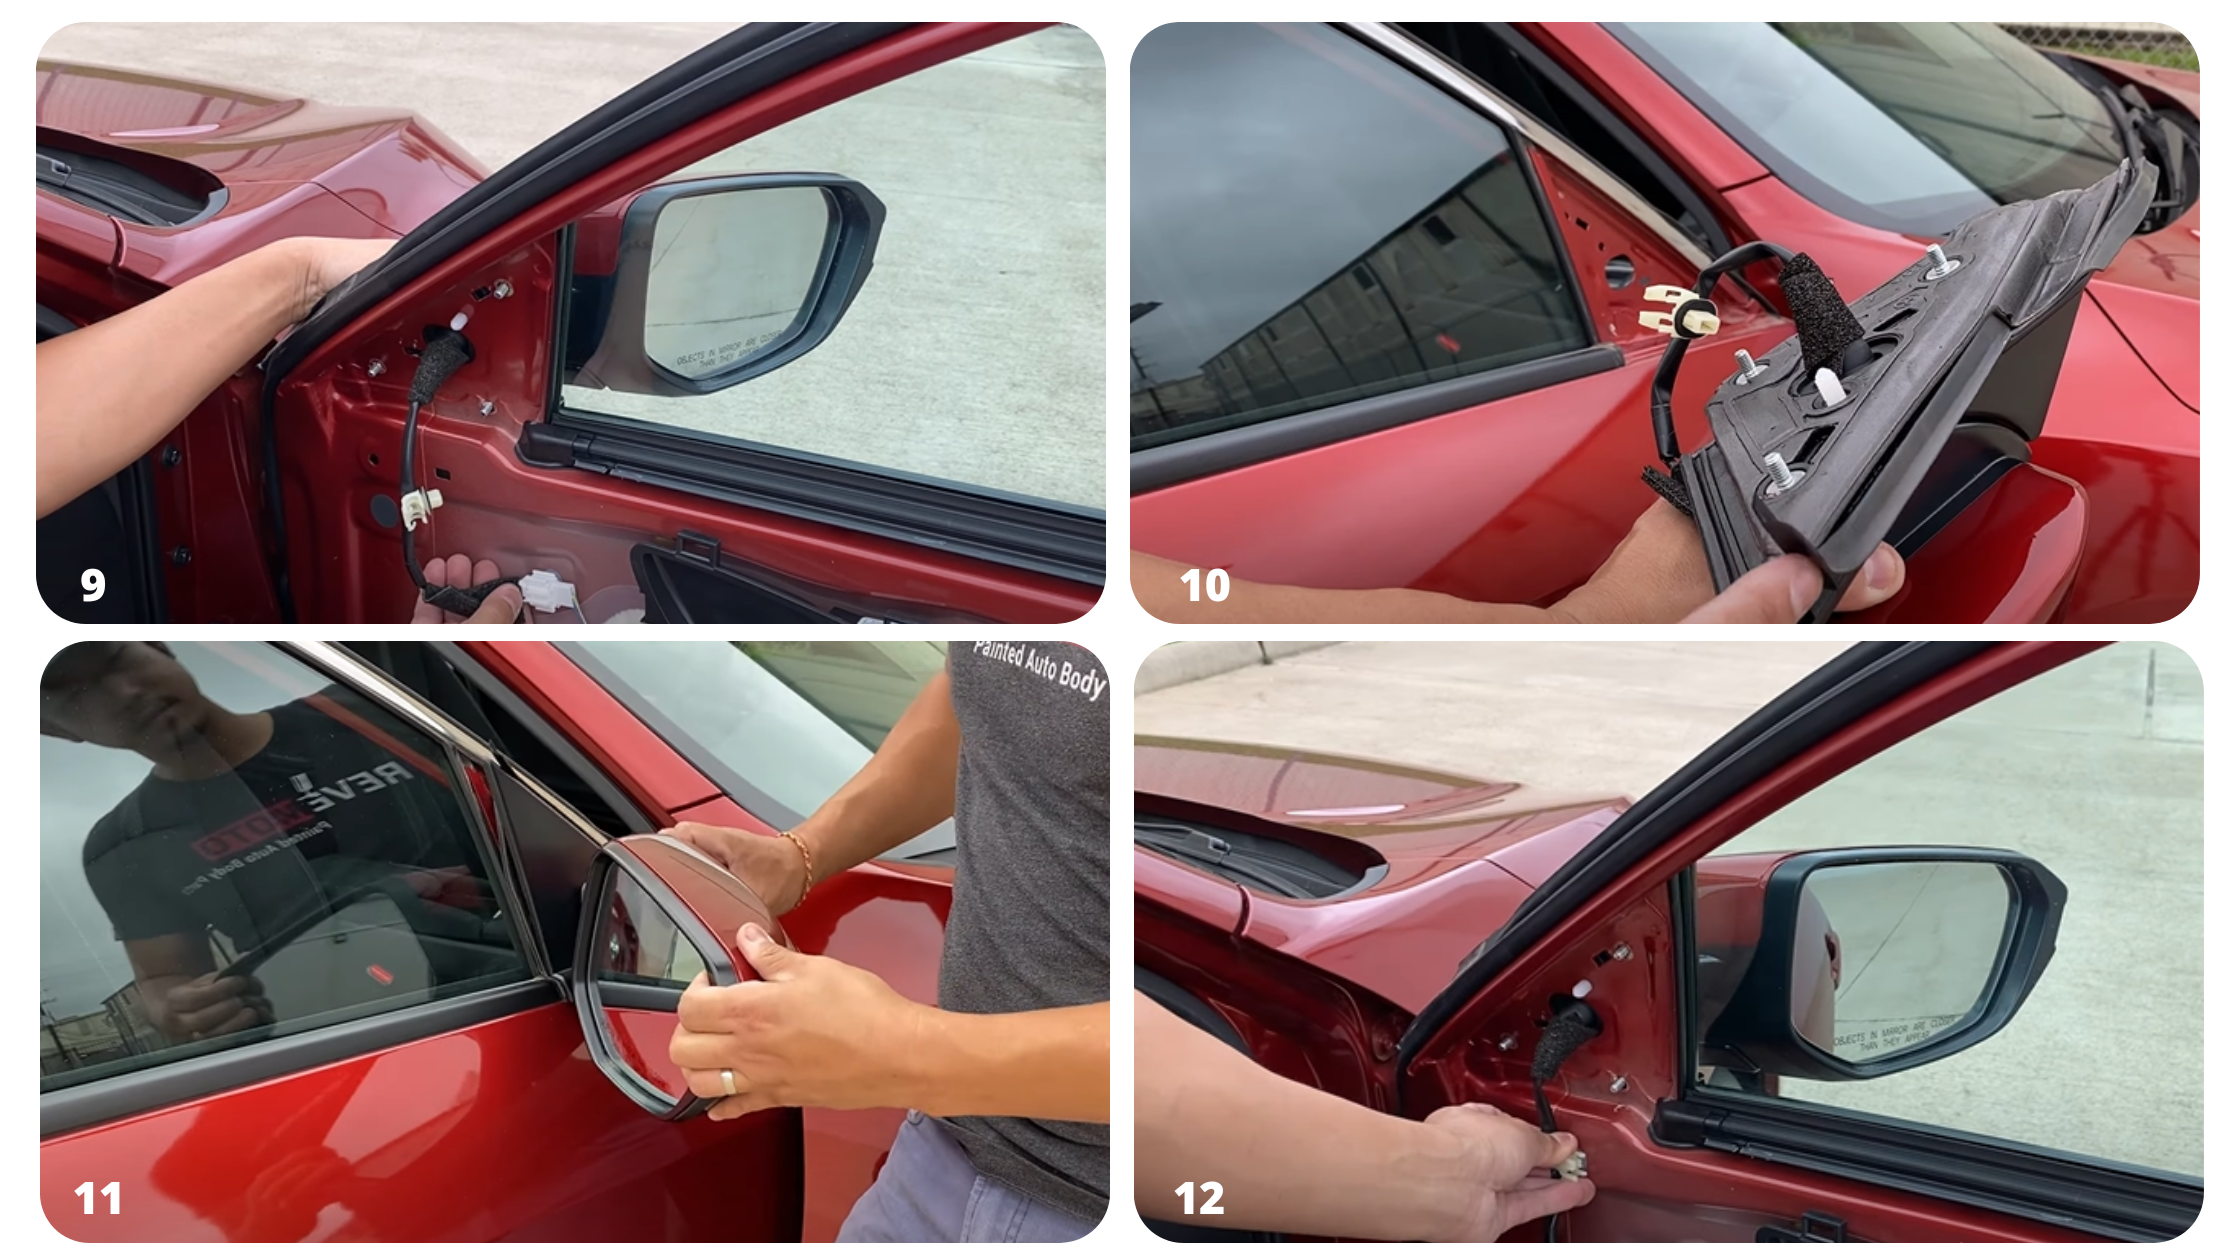 Replacing a 2016-2021 Honda Civic Side View Mirror steps 9-12